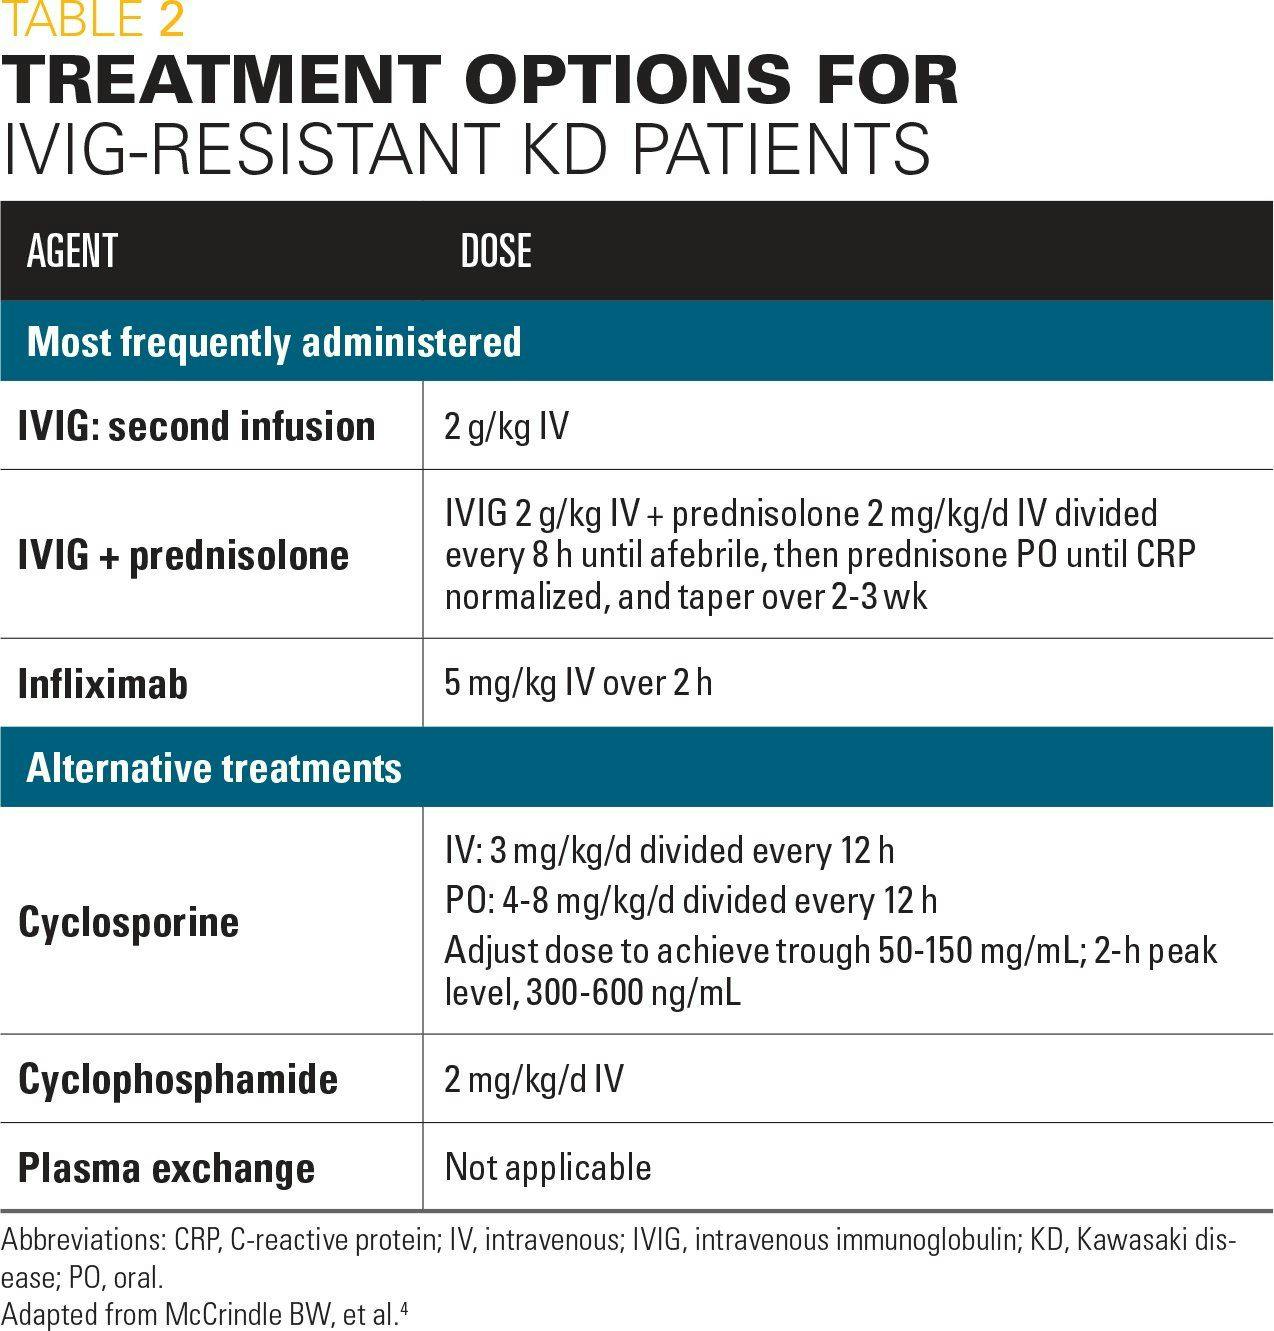 Treatment options for IVIG-resistant KD patients